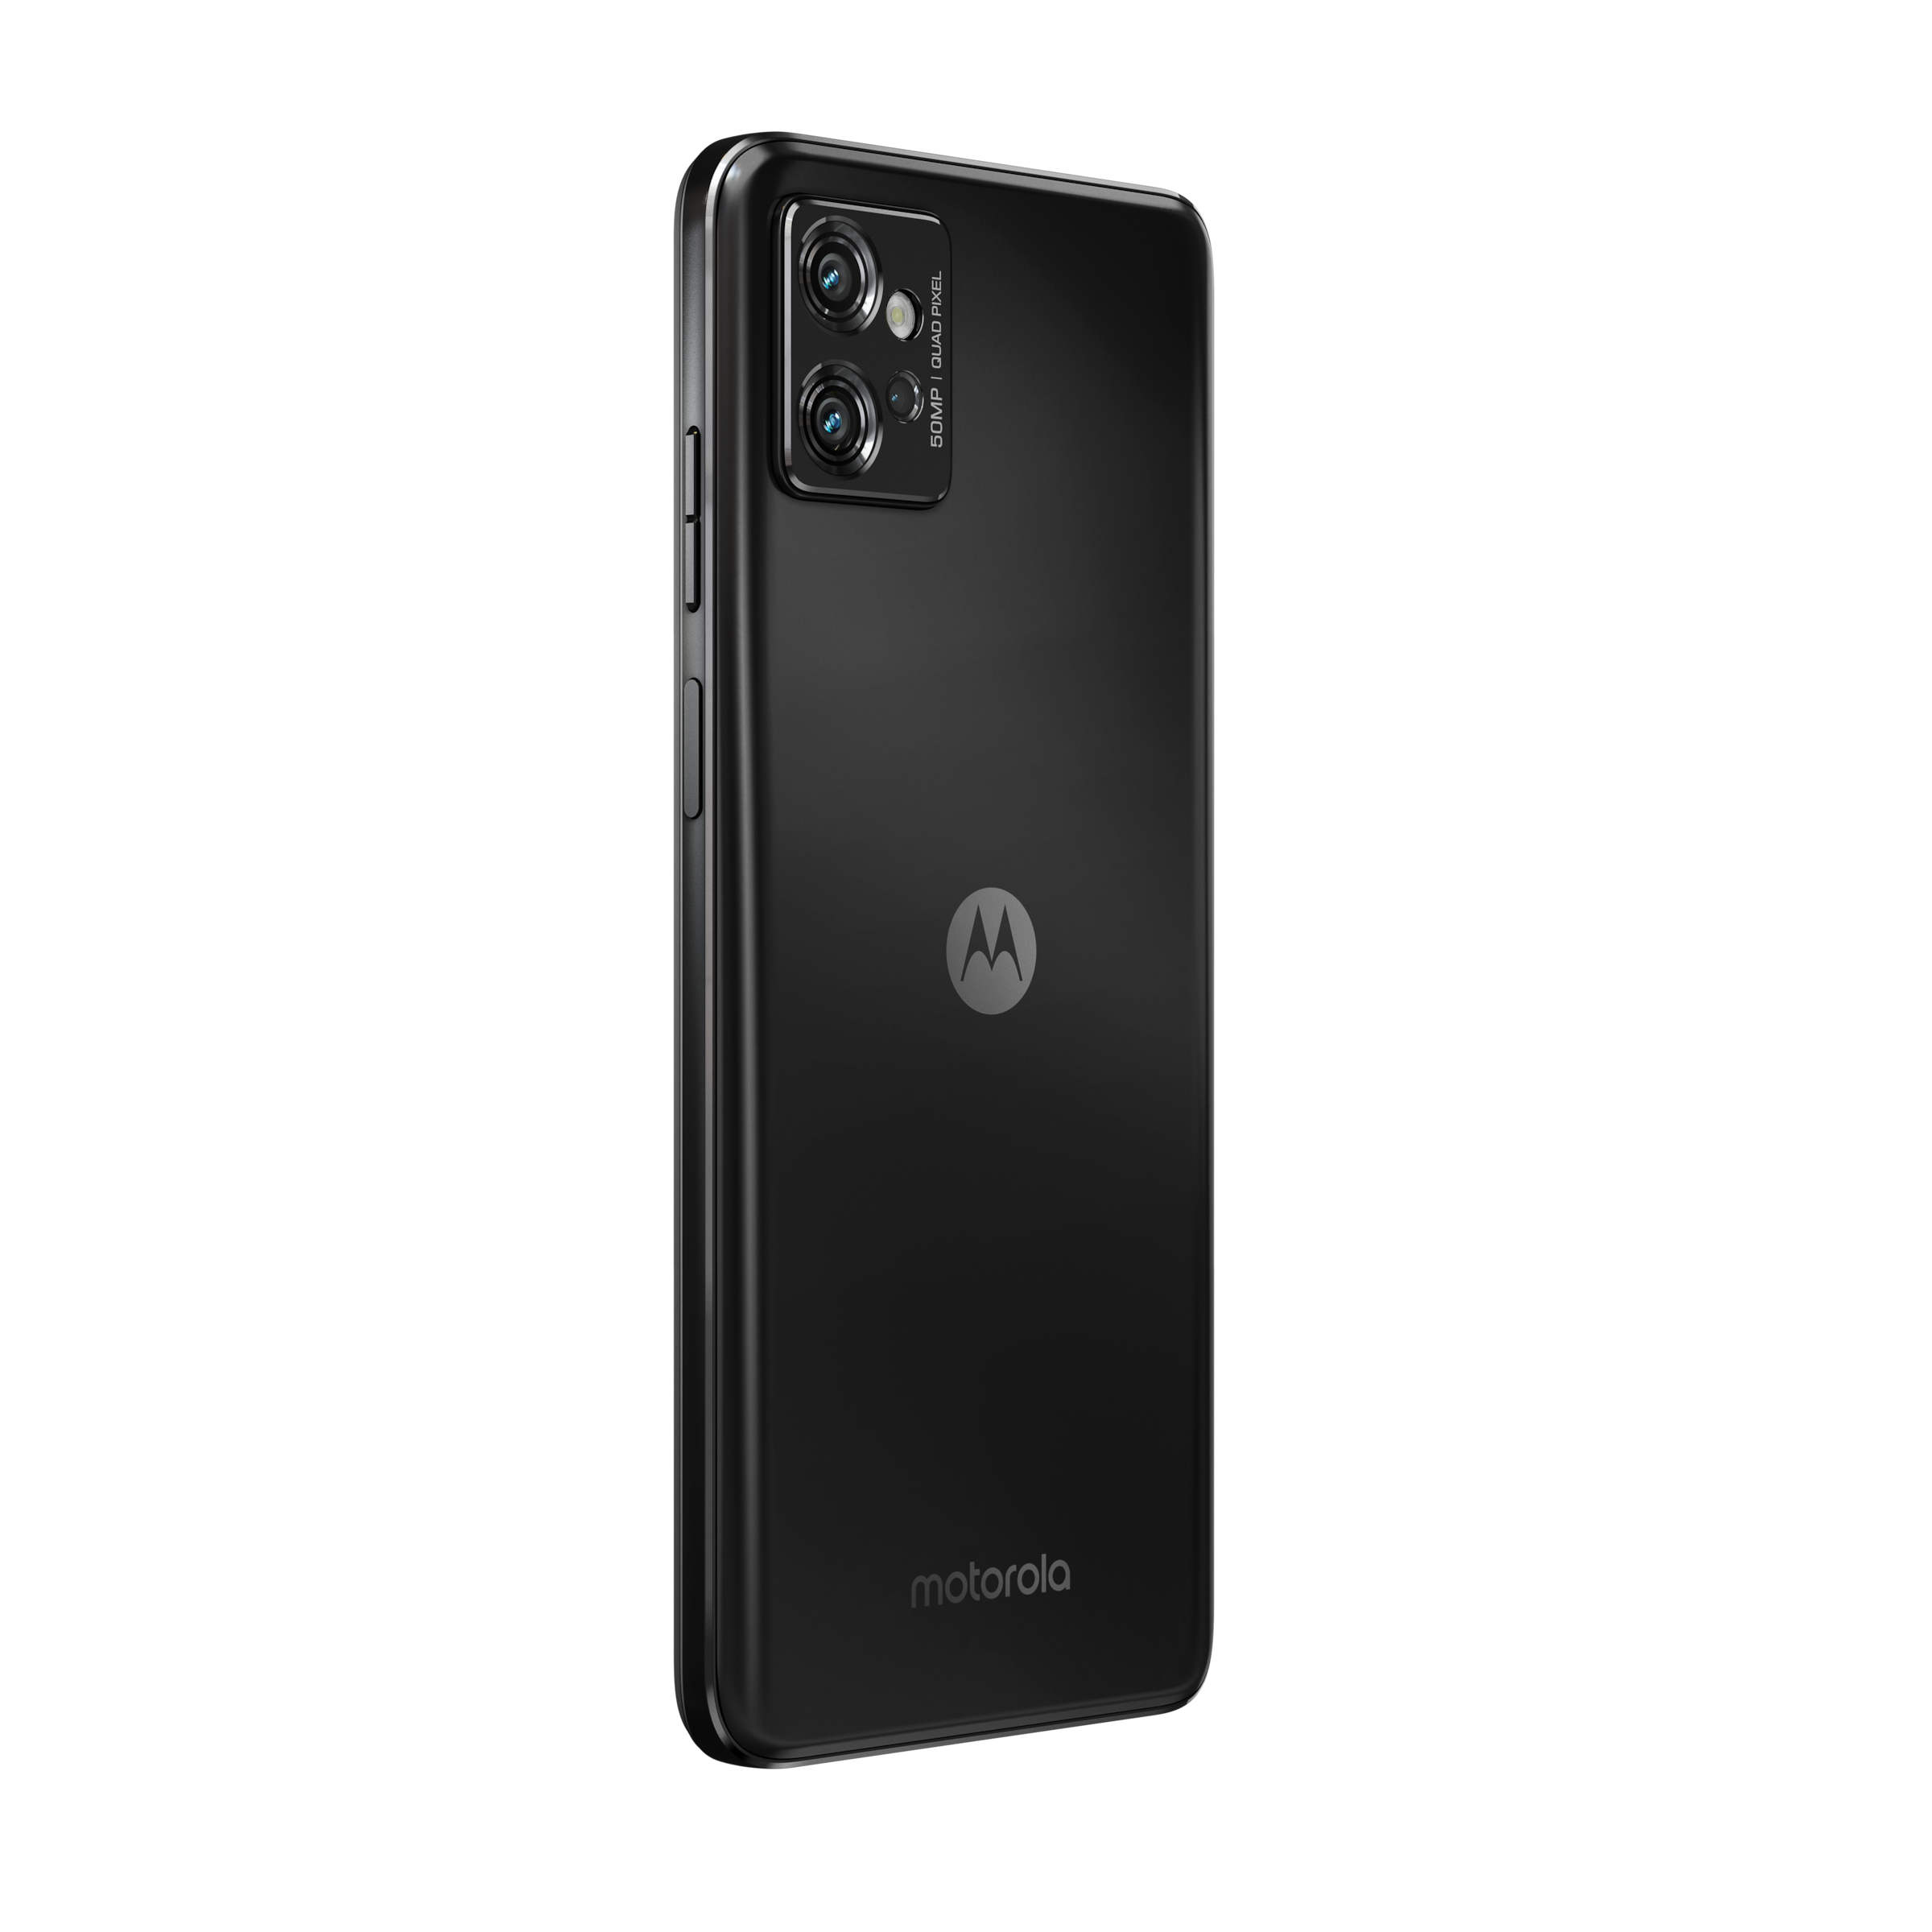 Motorola Smartphone »moto g32«, grau, 16,5 cm/6,5 Zoll, 128 GB Speicherplatz, 50 MP Kamera